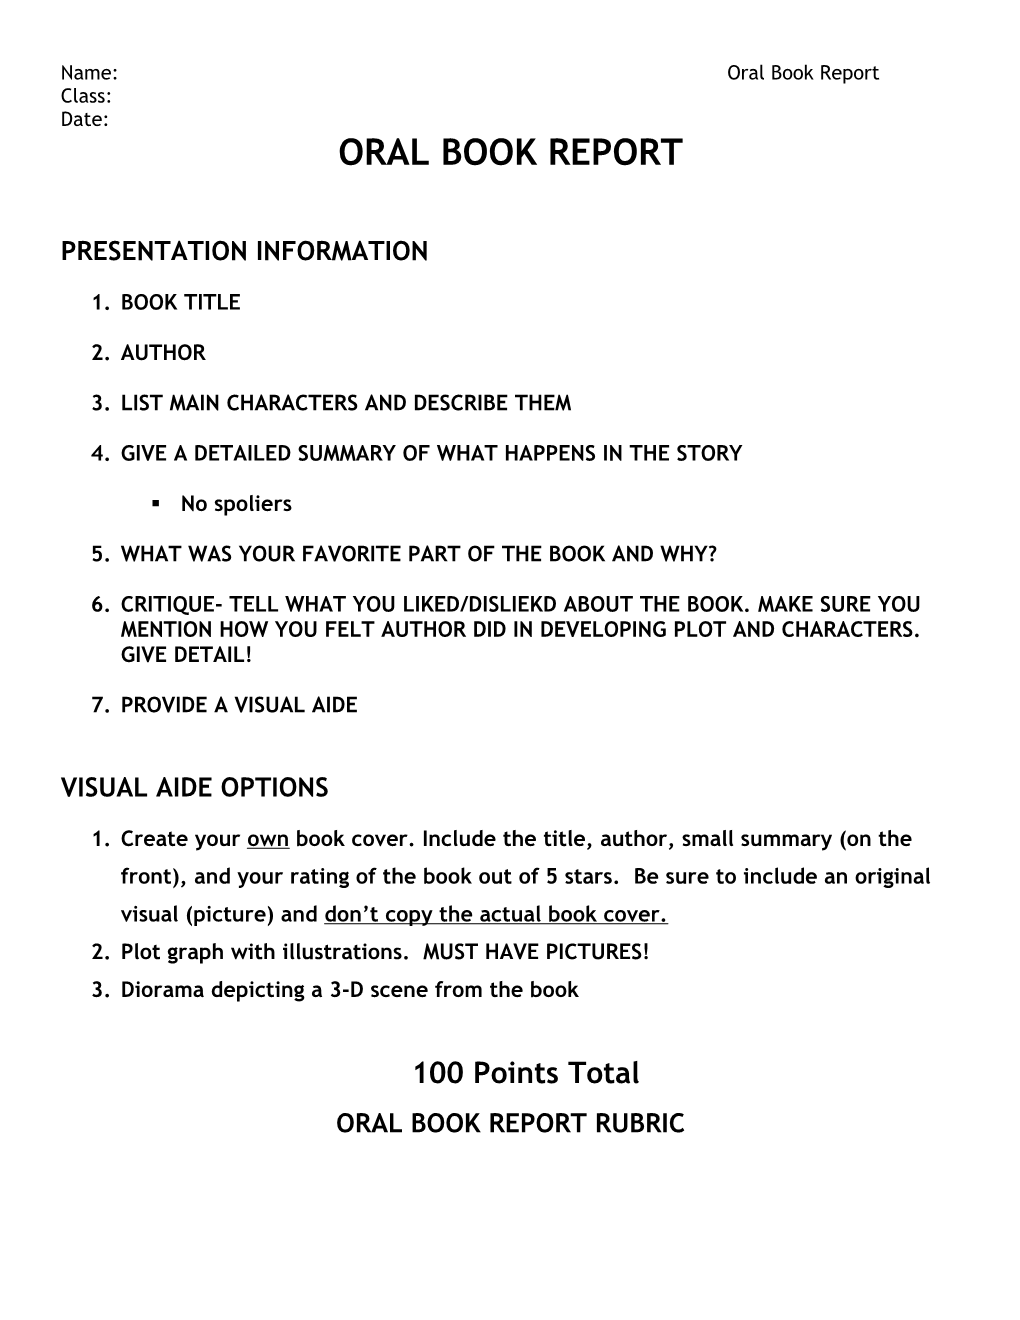 Oral Book Report Rubric